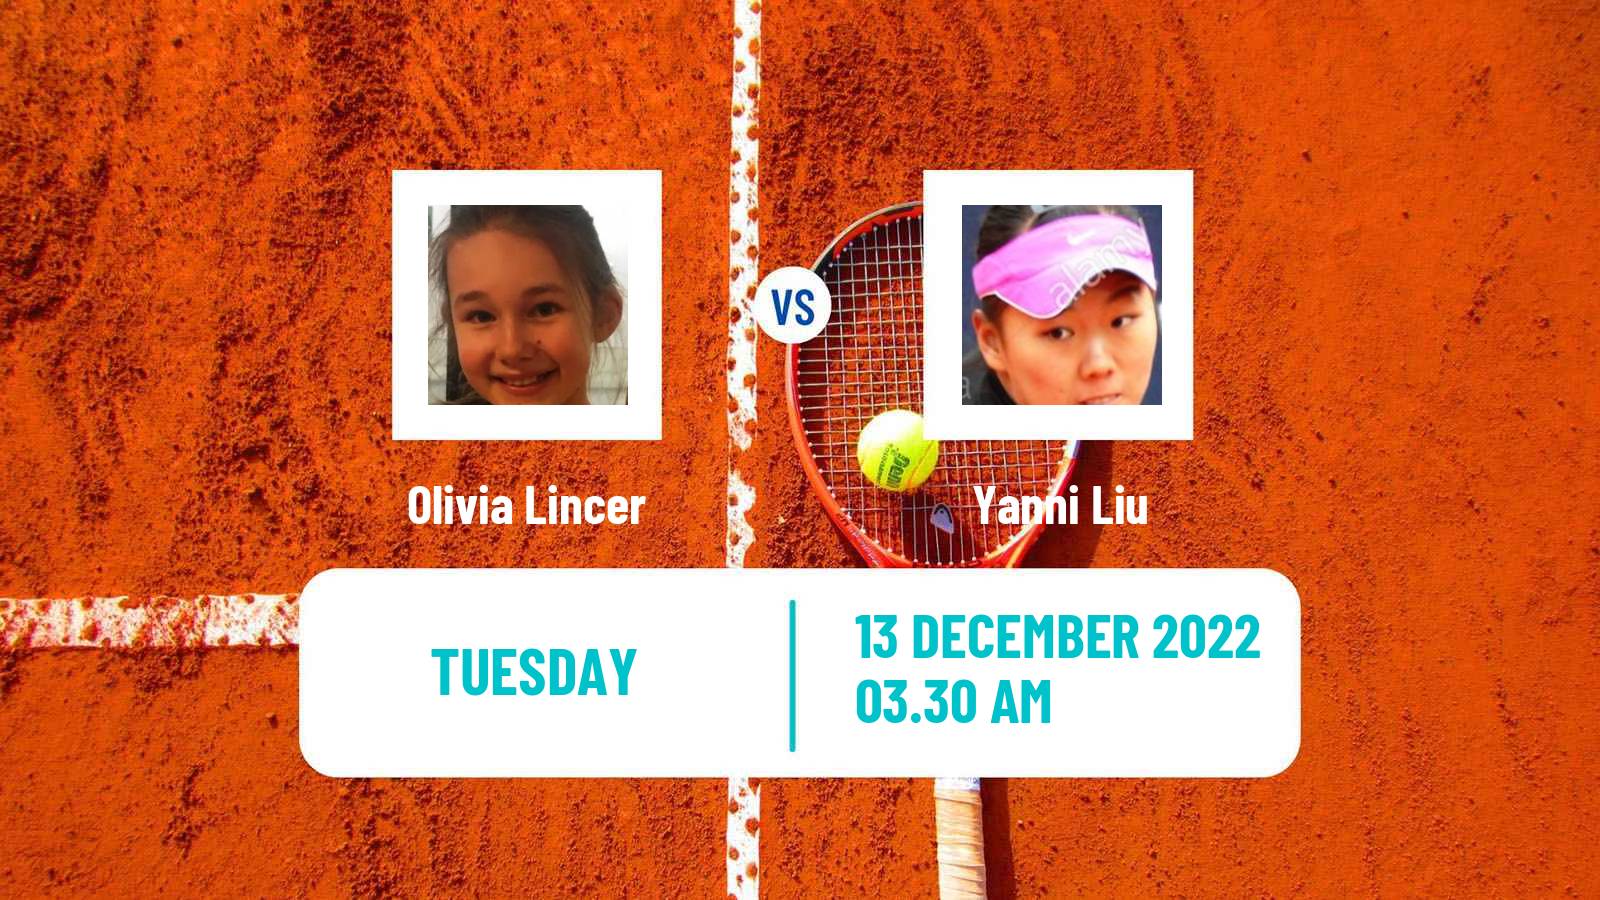 Tennis ITF Tournaments Olivia Lincer - Yanni Liu